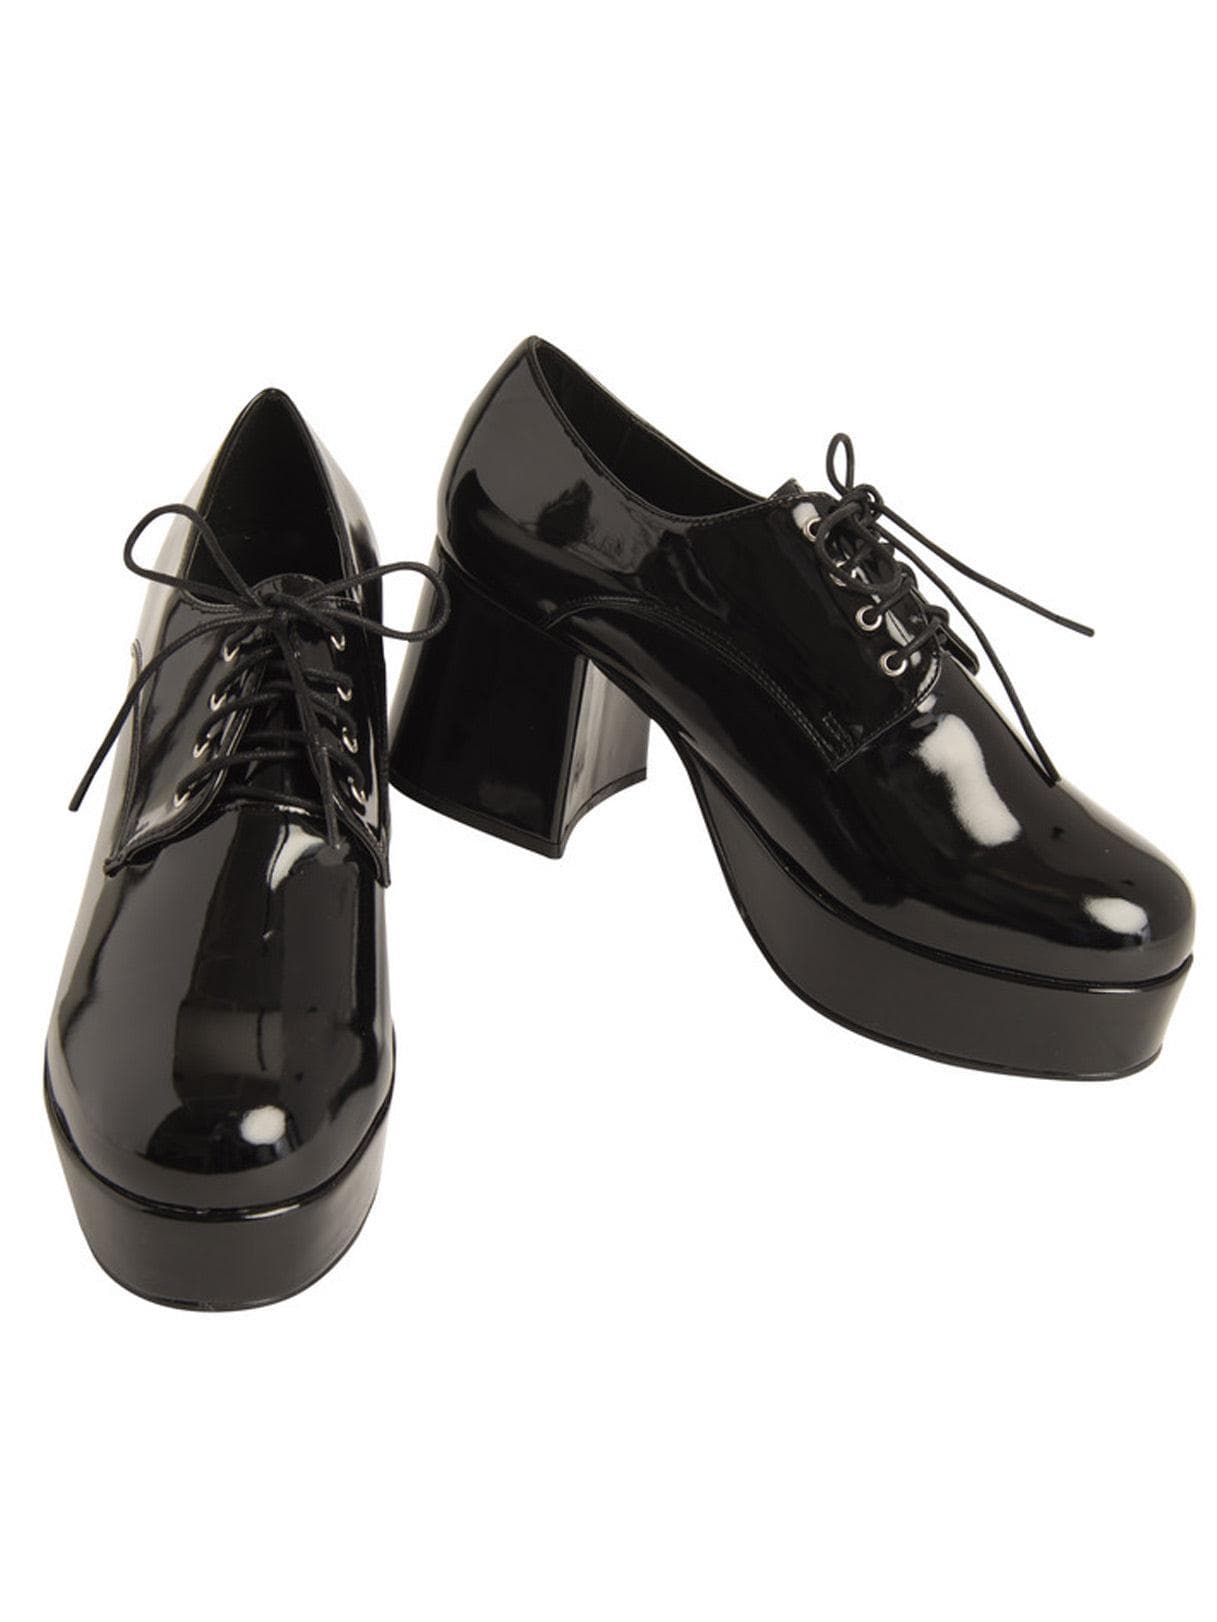 Adult Black70's Platform Heeled Shoes - costumes.com